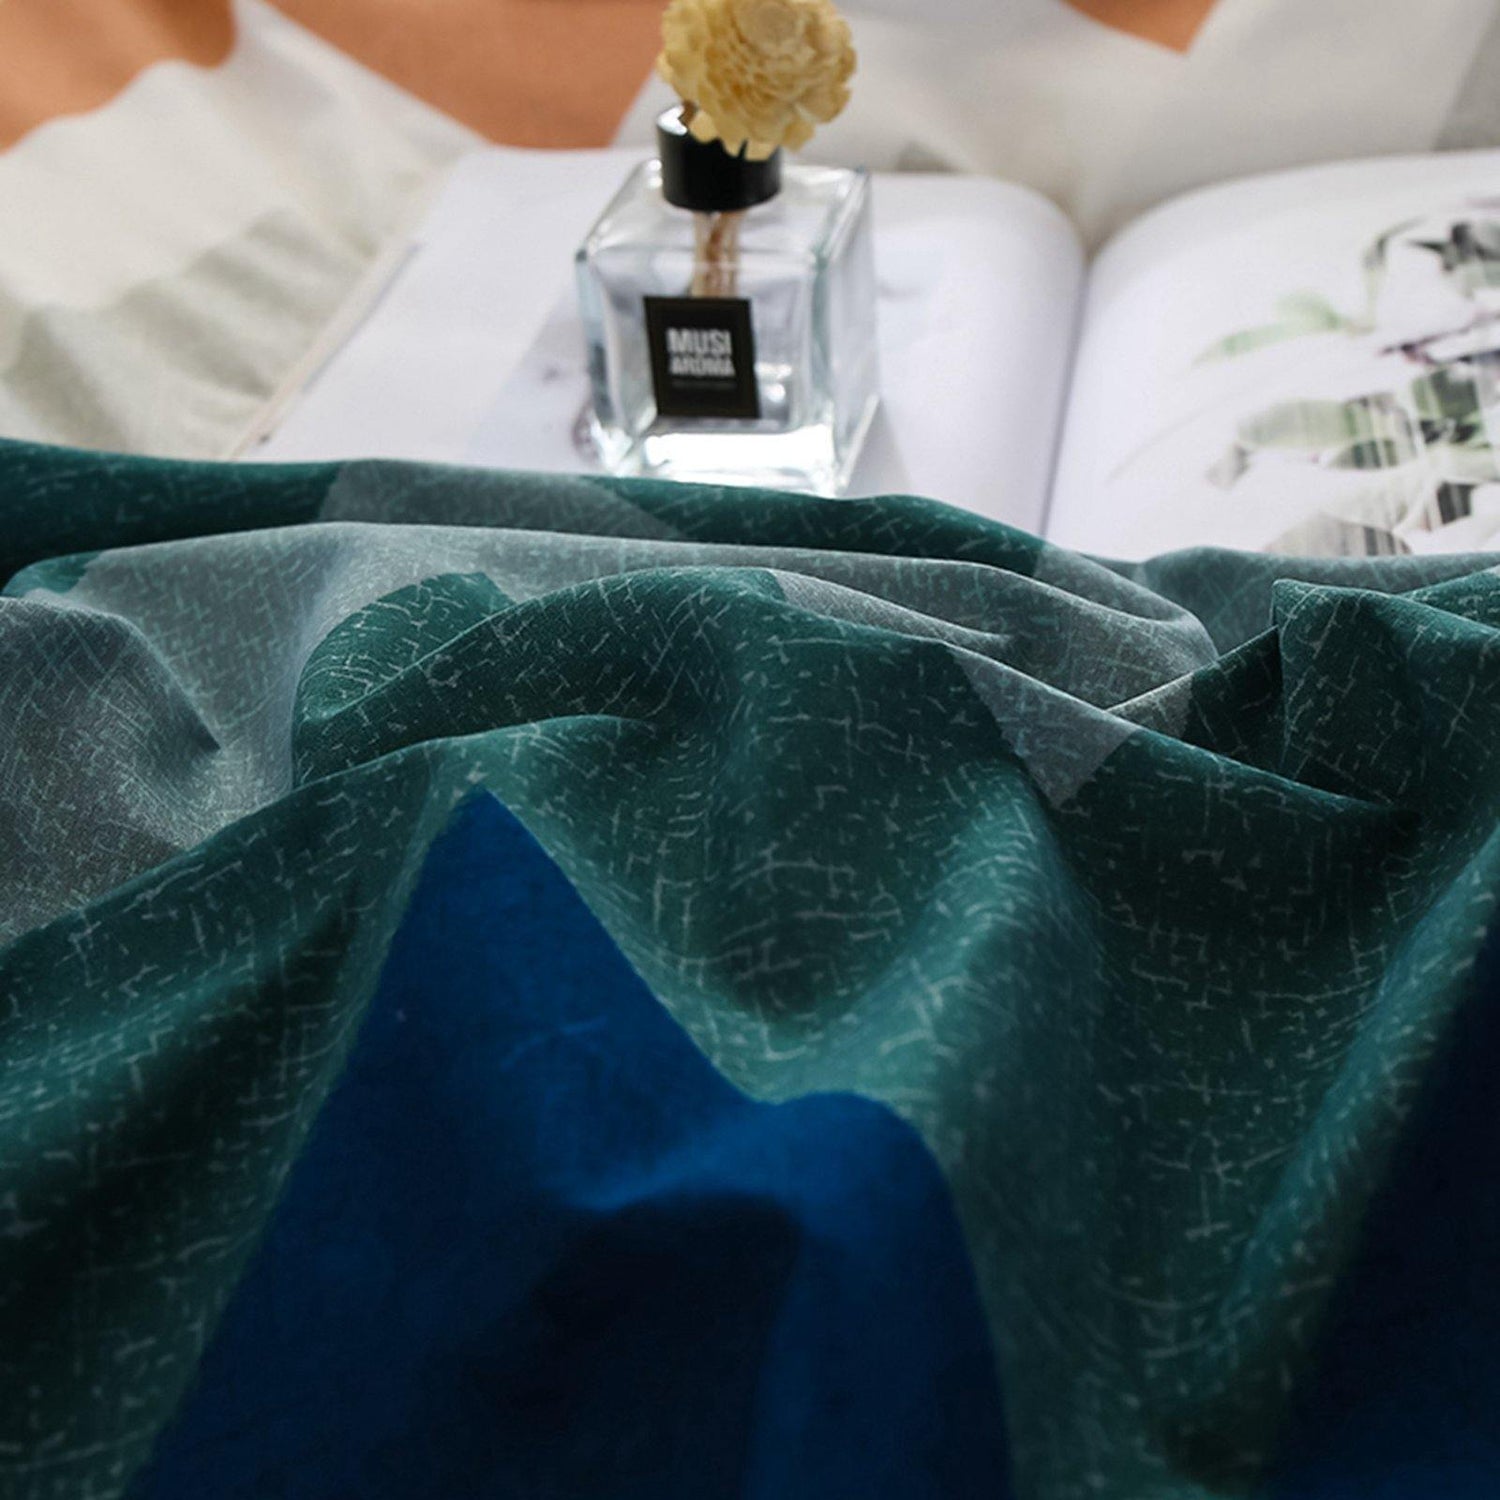 WONGS BEDDING Interlaced Colors Duvet Cover Set - Wongs bedding